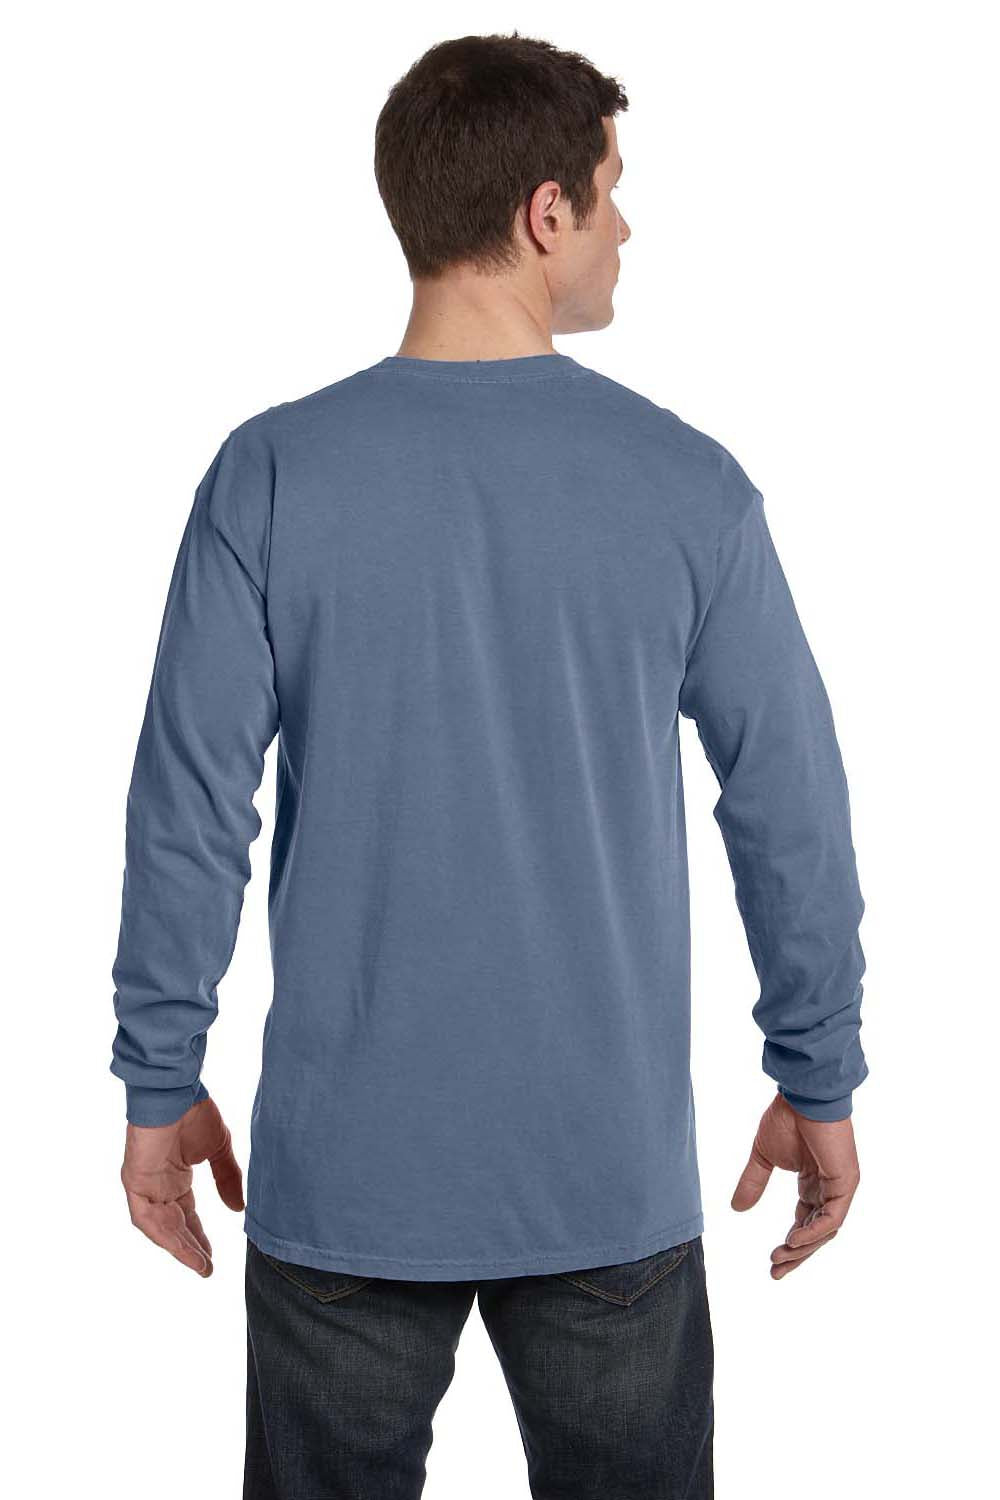 Comfort Colors C6014 Mens Long Sleeve Crewneck T-Shirt Blue Jean Back